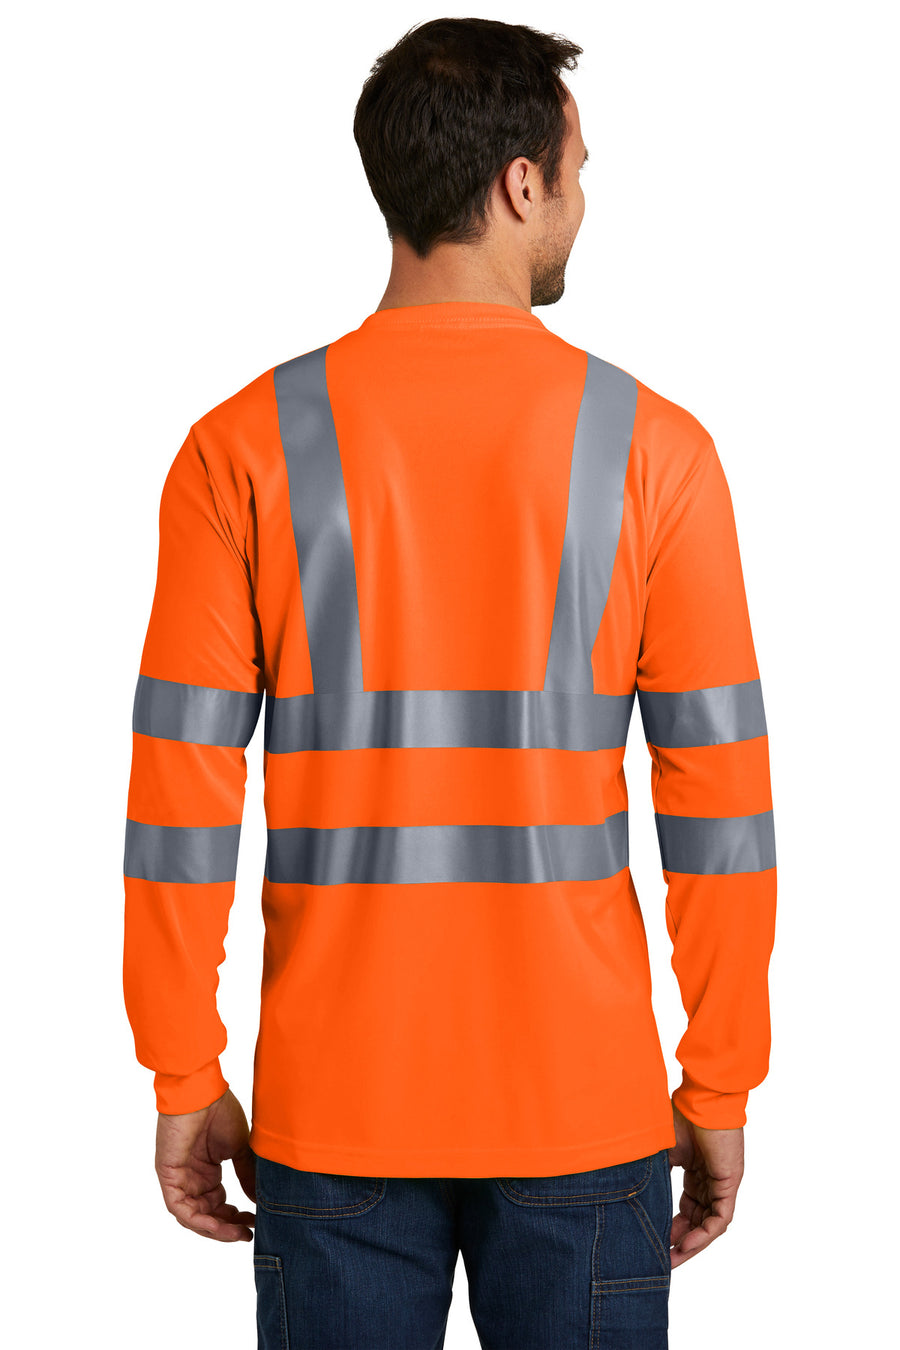 CS409-Safety Orange-back_model